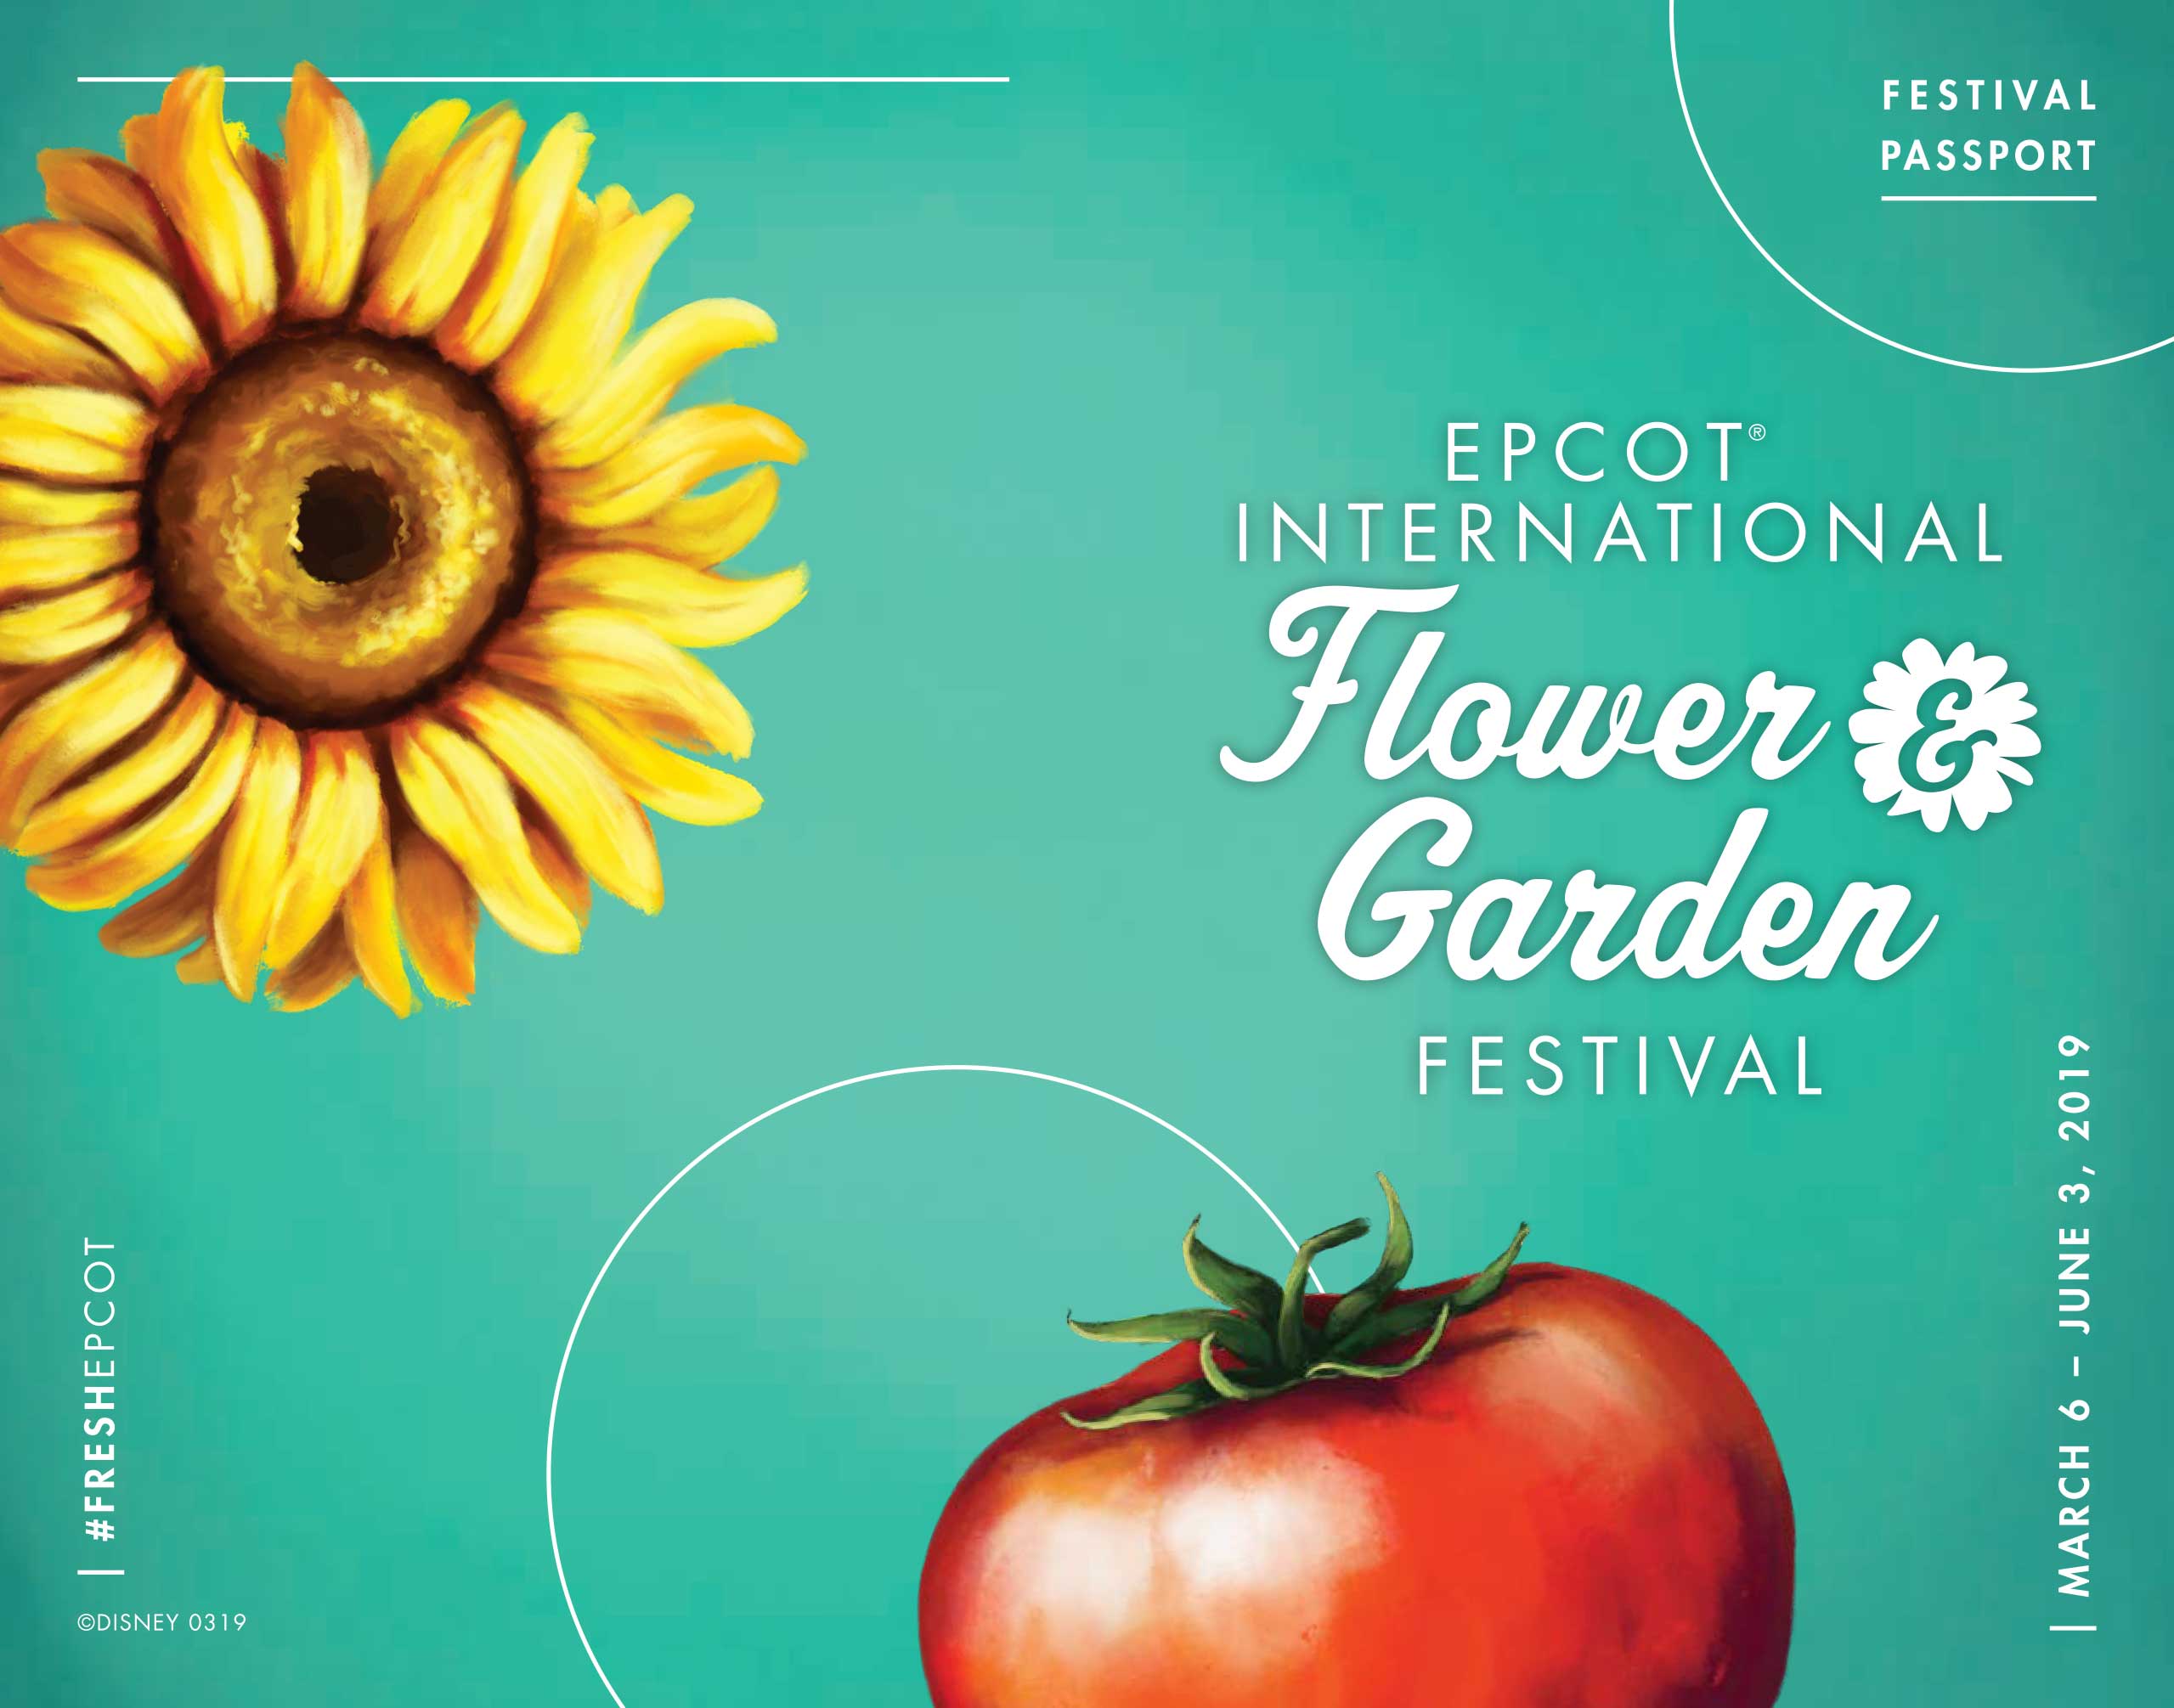 2019 epcot international flower and garden festival passport - photo